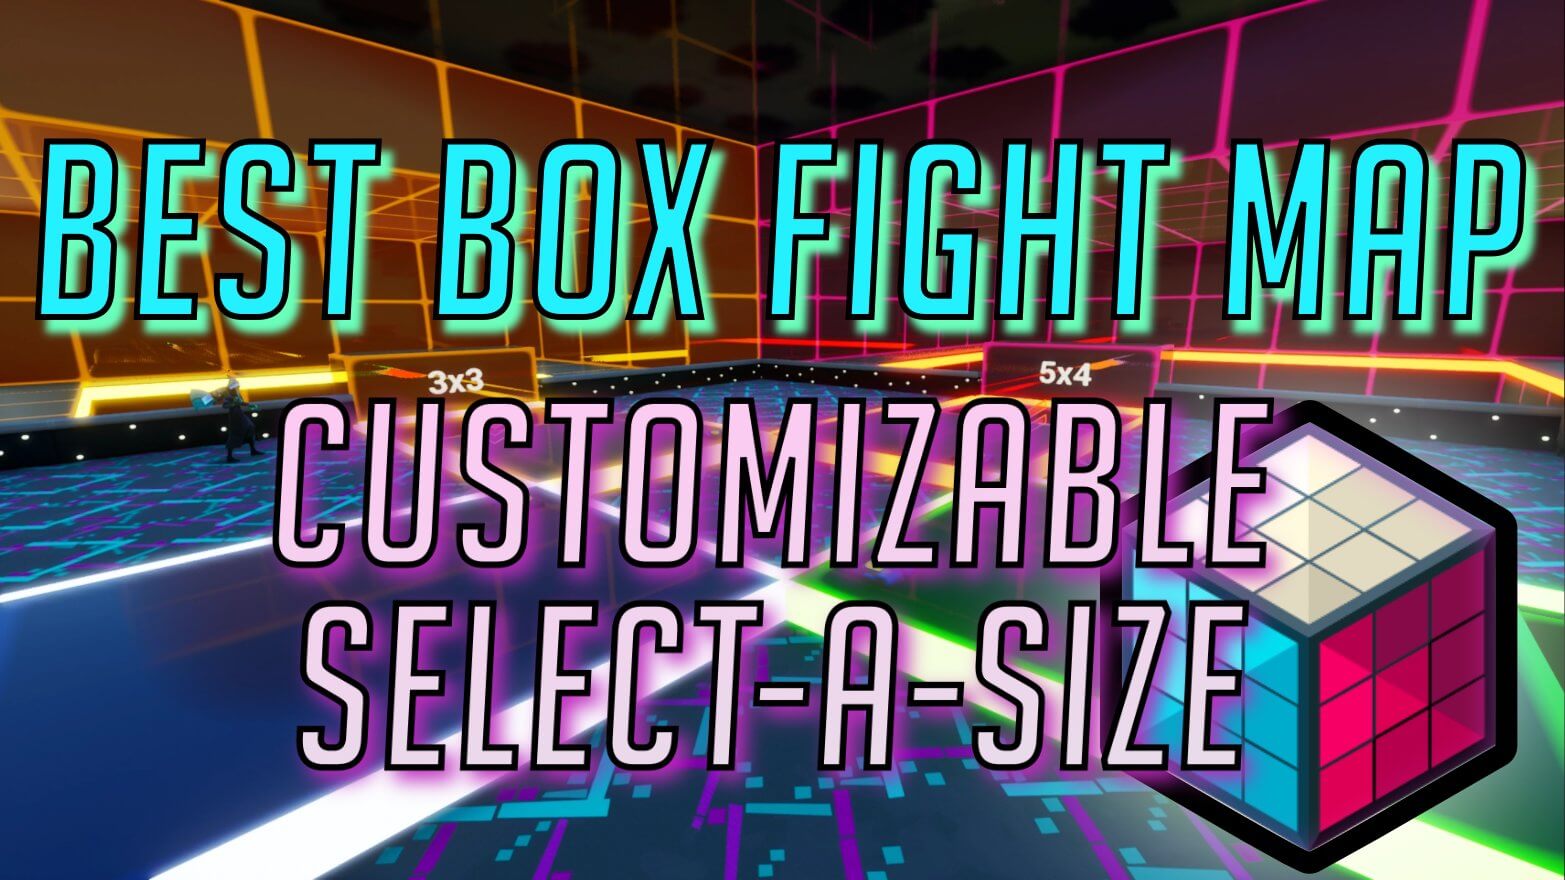 clix box fight